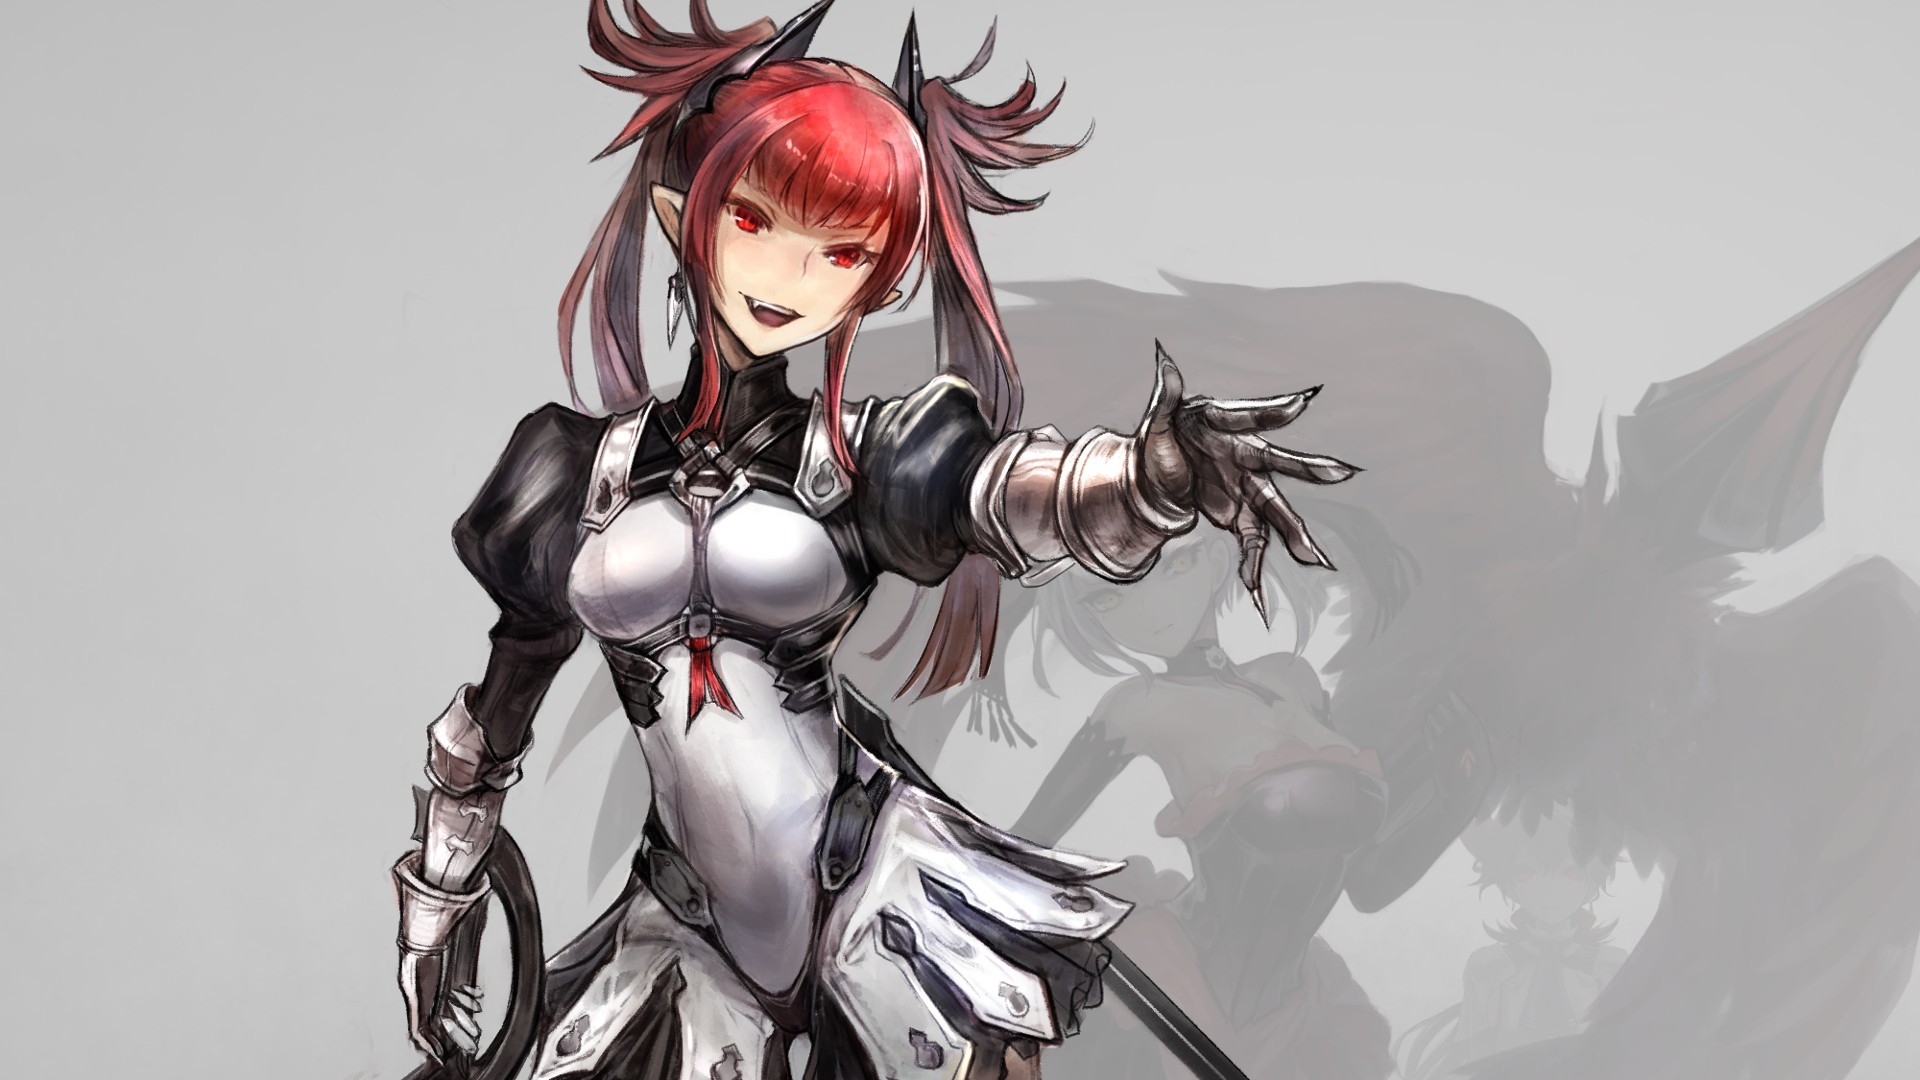 Redhead girl anime armor Desktop wallpapers 1680x1050